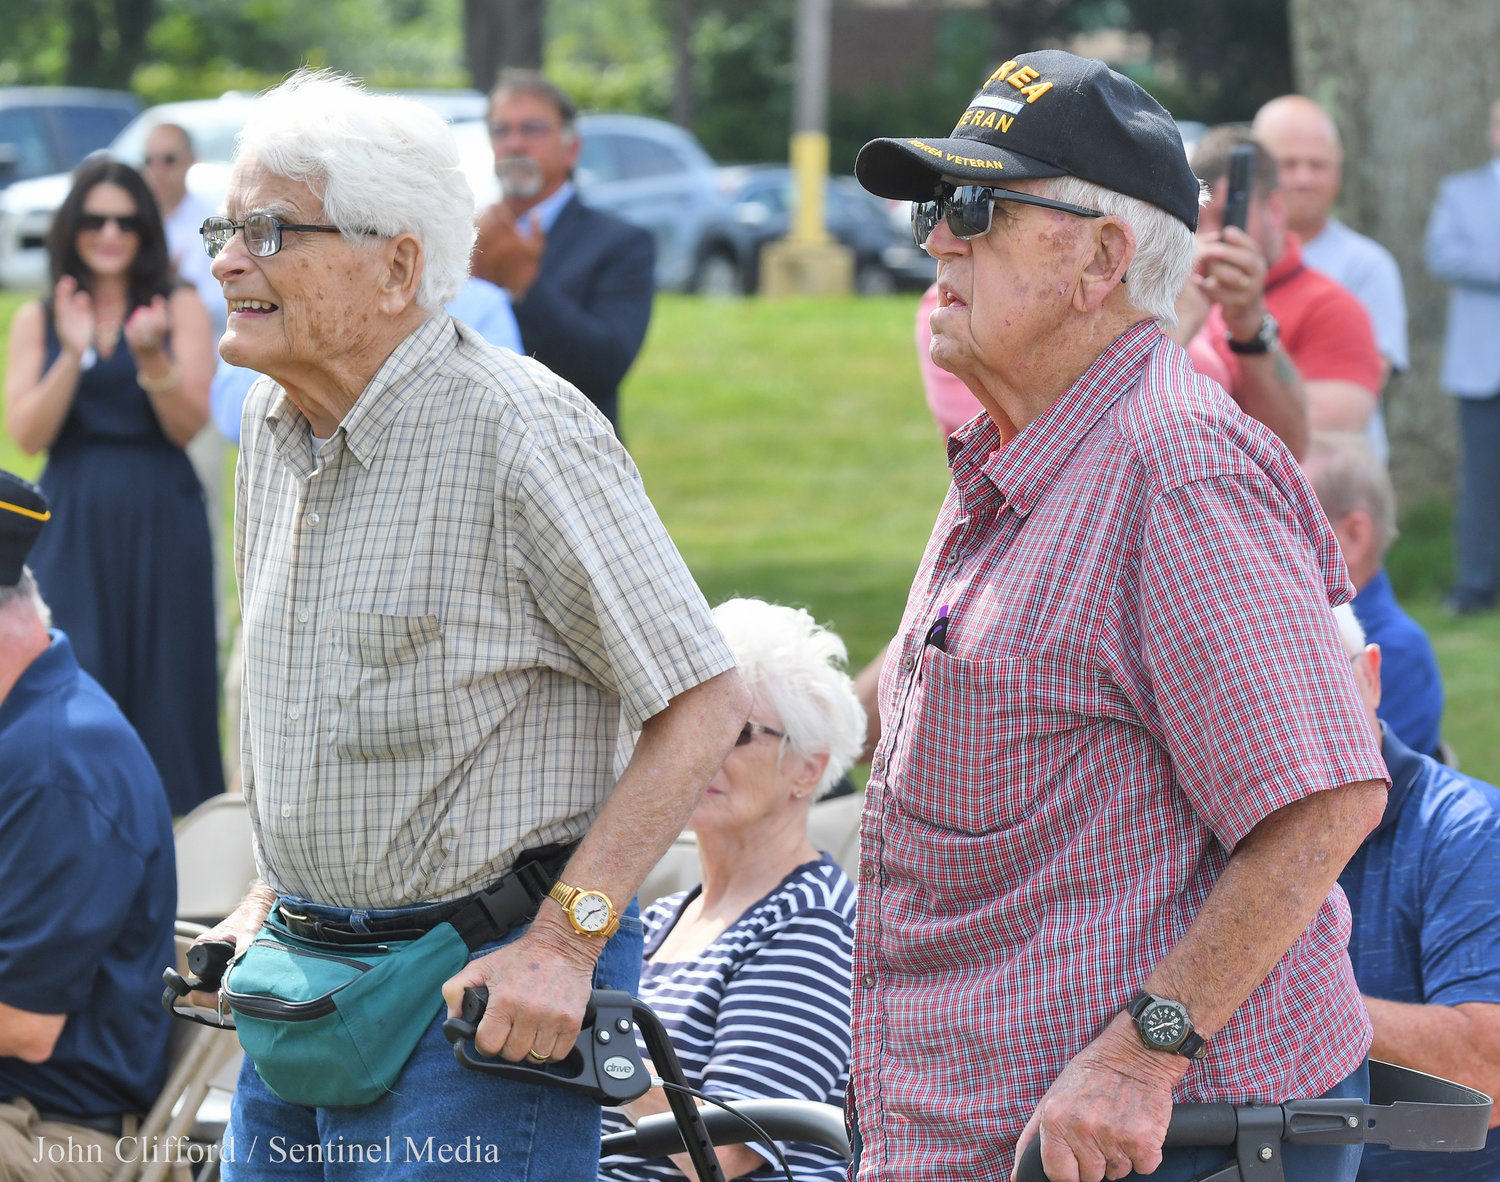 Korean War veterans Bernard Hurlbut (1951-52) and Richard Hallenbeck Sr. (1951-53 and active reserve until 1959) stand to be acknowledged as veterans of the "forgotten war."